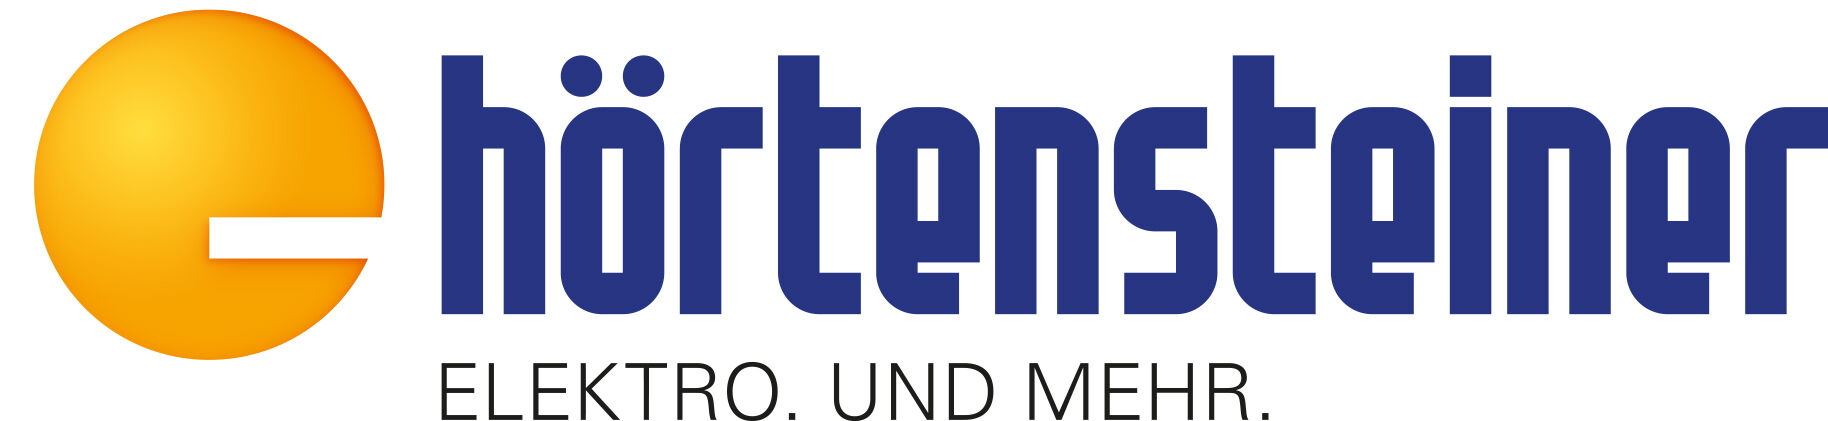 hoertensteiner_logo